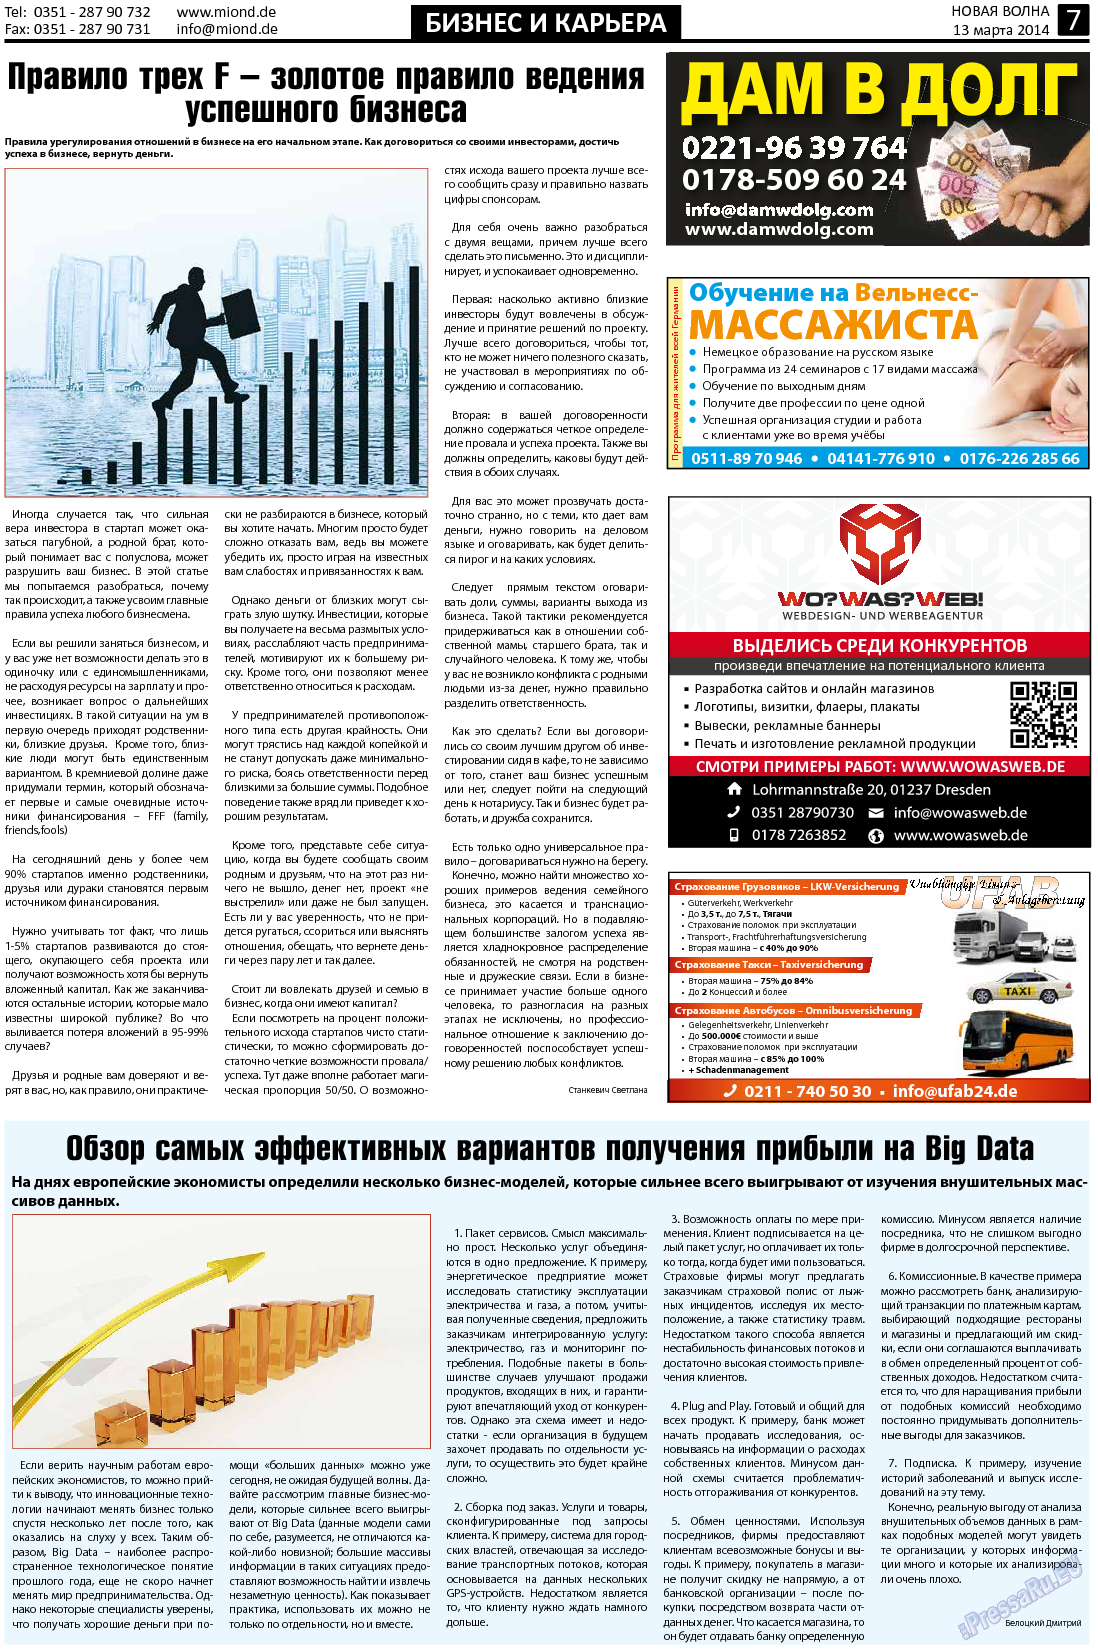 Новая Wолна, газета. 2014 №11 стр.7